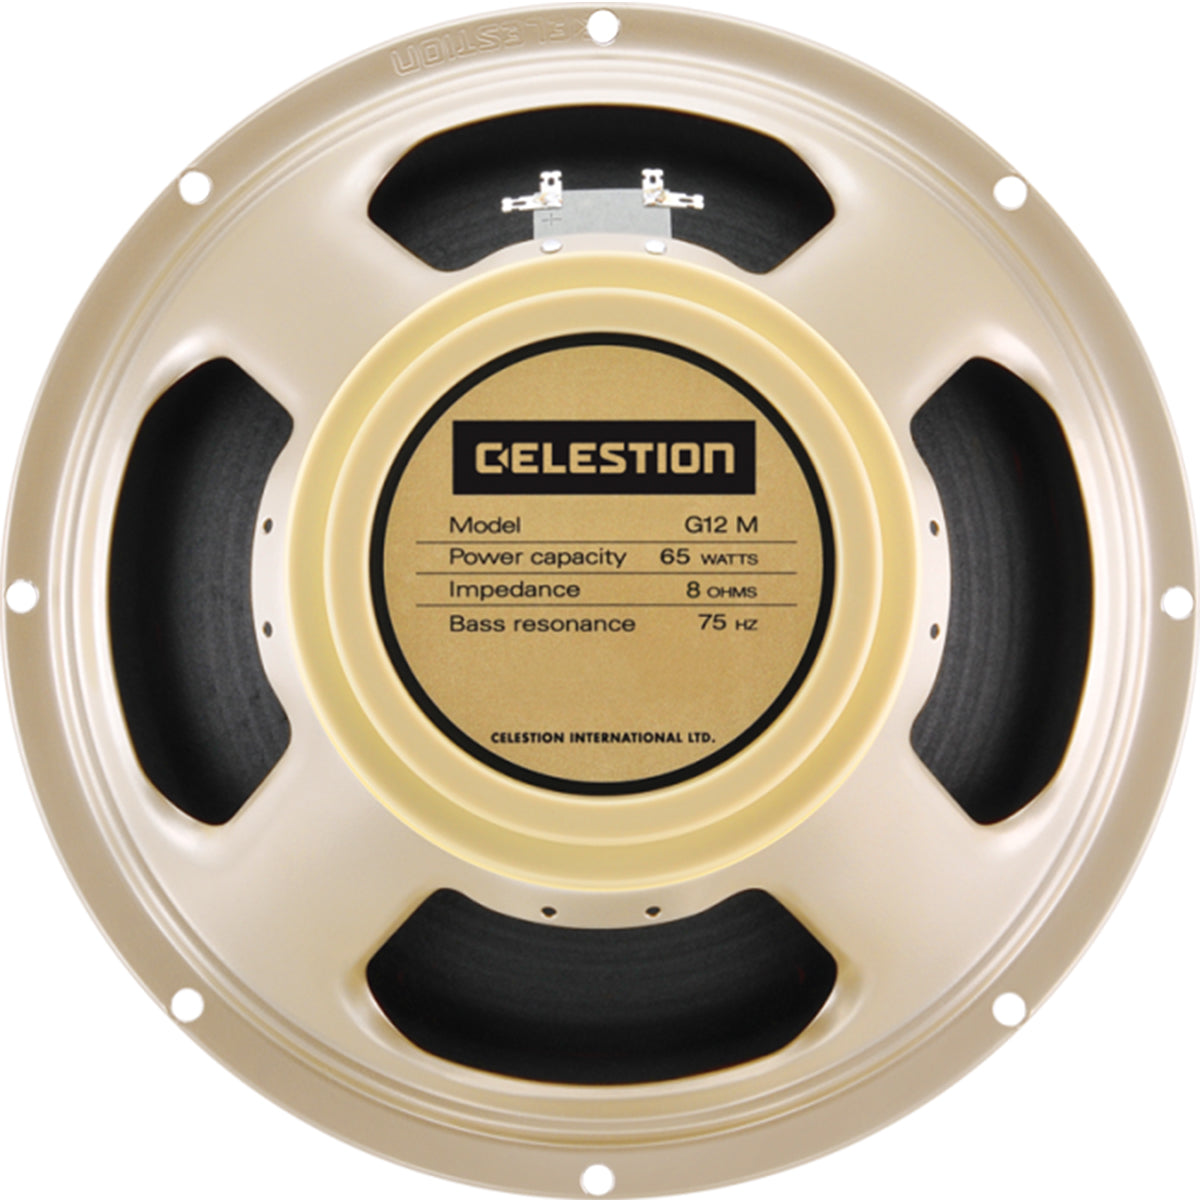 Celestion T5864 Classic Series G12M 65 Creamback Guitar Speaker 12 Inch 65W 8OHM